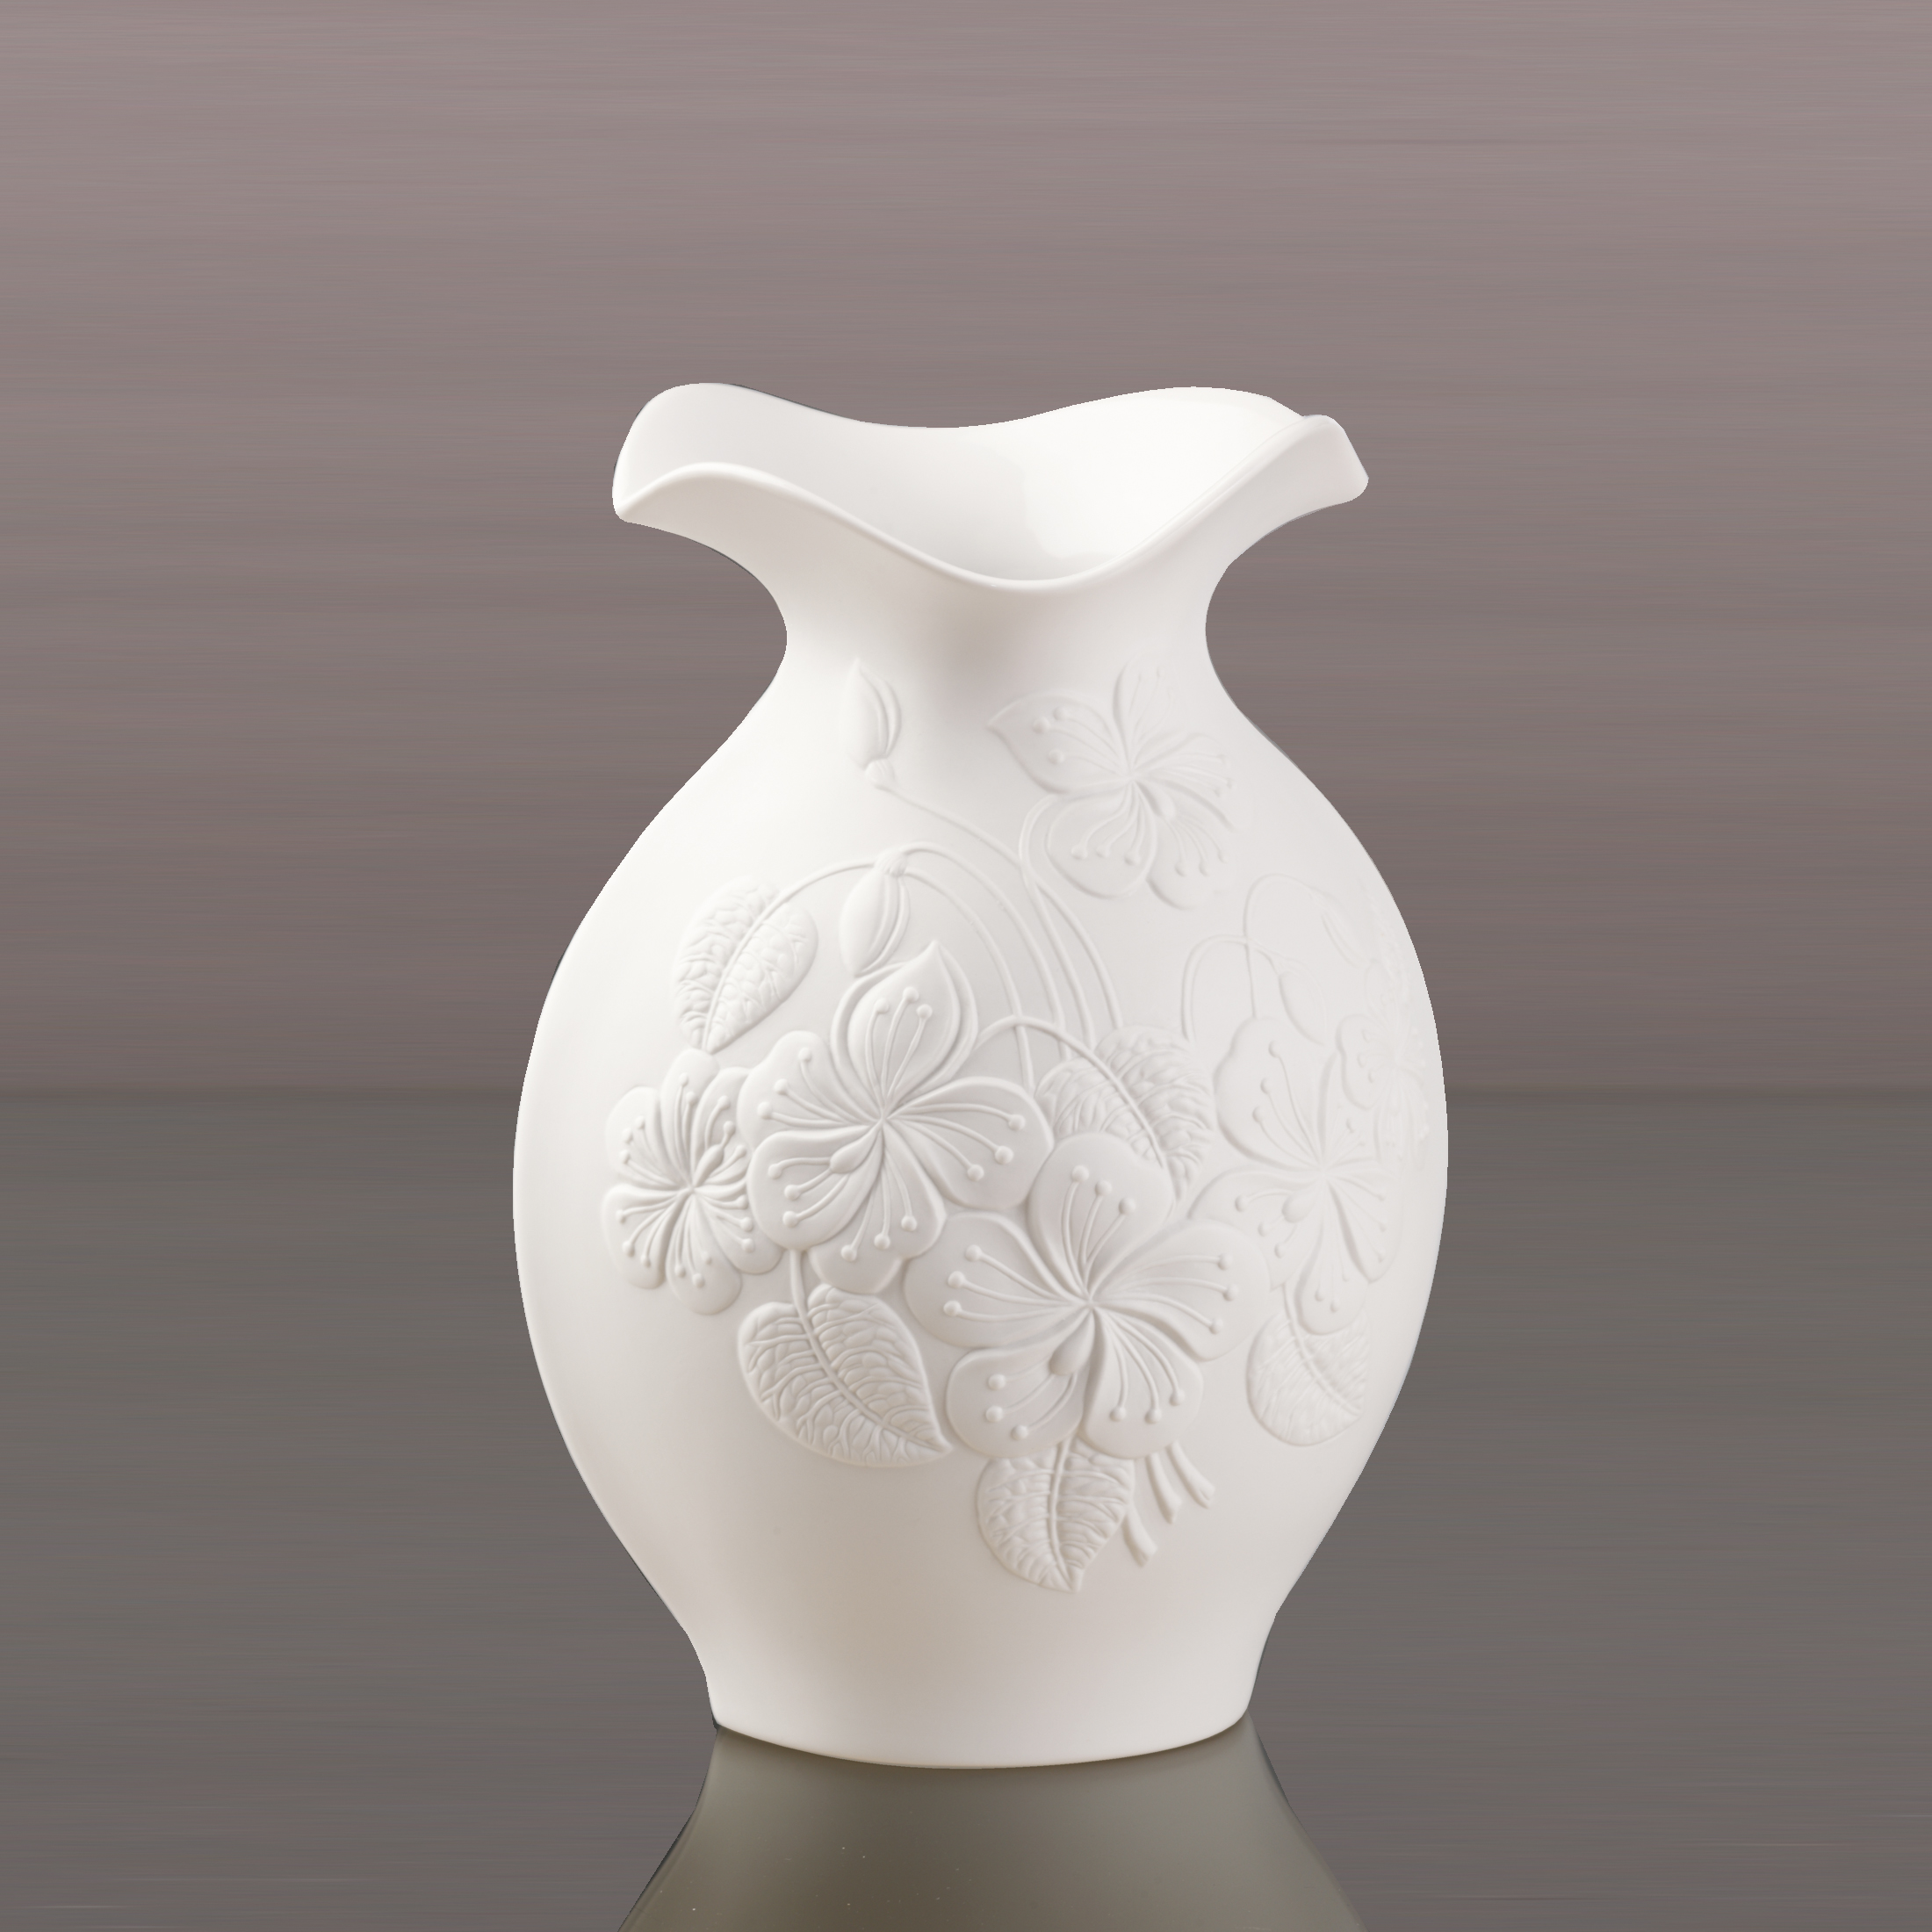 Vase 25 Floralie Kaiser Dekoralia.de Goebel cm - Porzellan